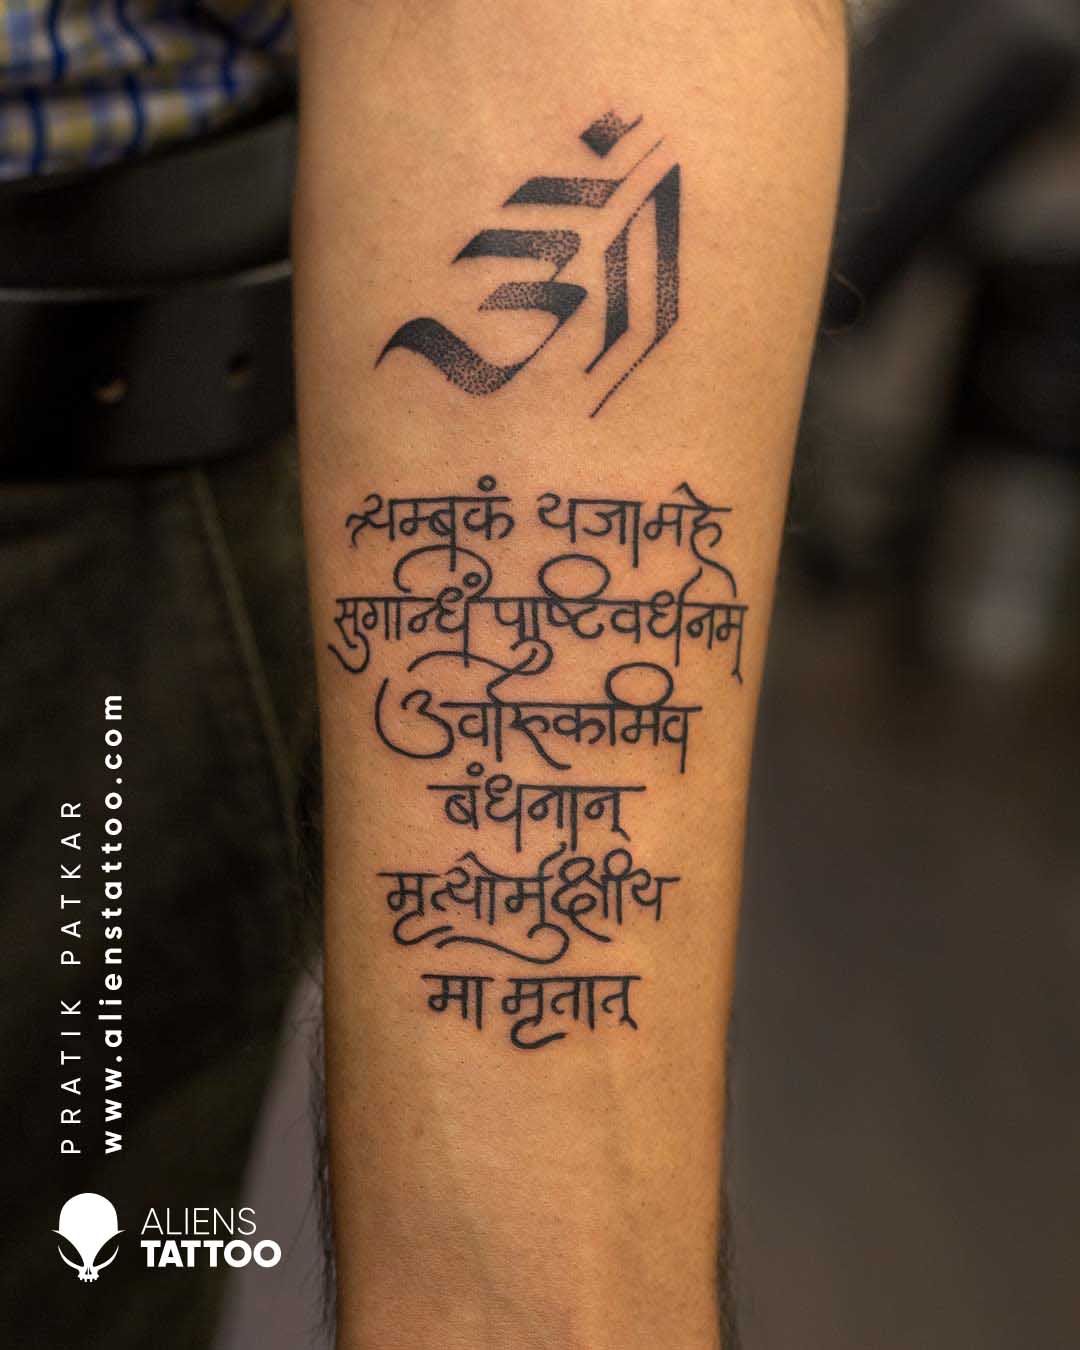 181 Tattooz Studio Nashik on Instagram King of Maratha Empire Chatrapati Shivaji  Maharaj Tattoo on forearm recently done at 181 Tattooz Studio For  consultation do visit